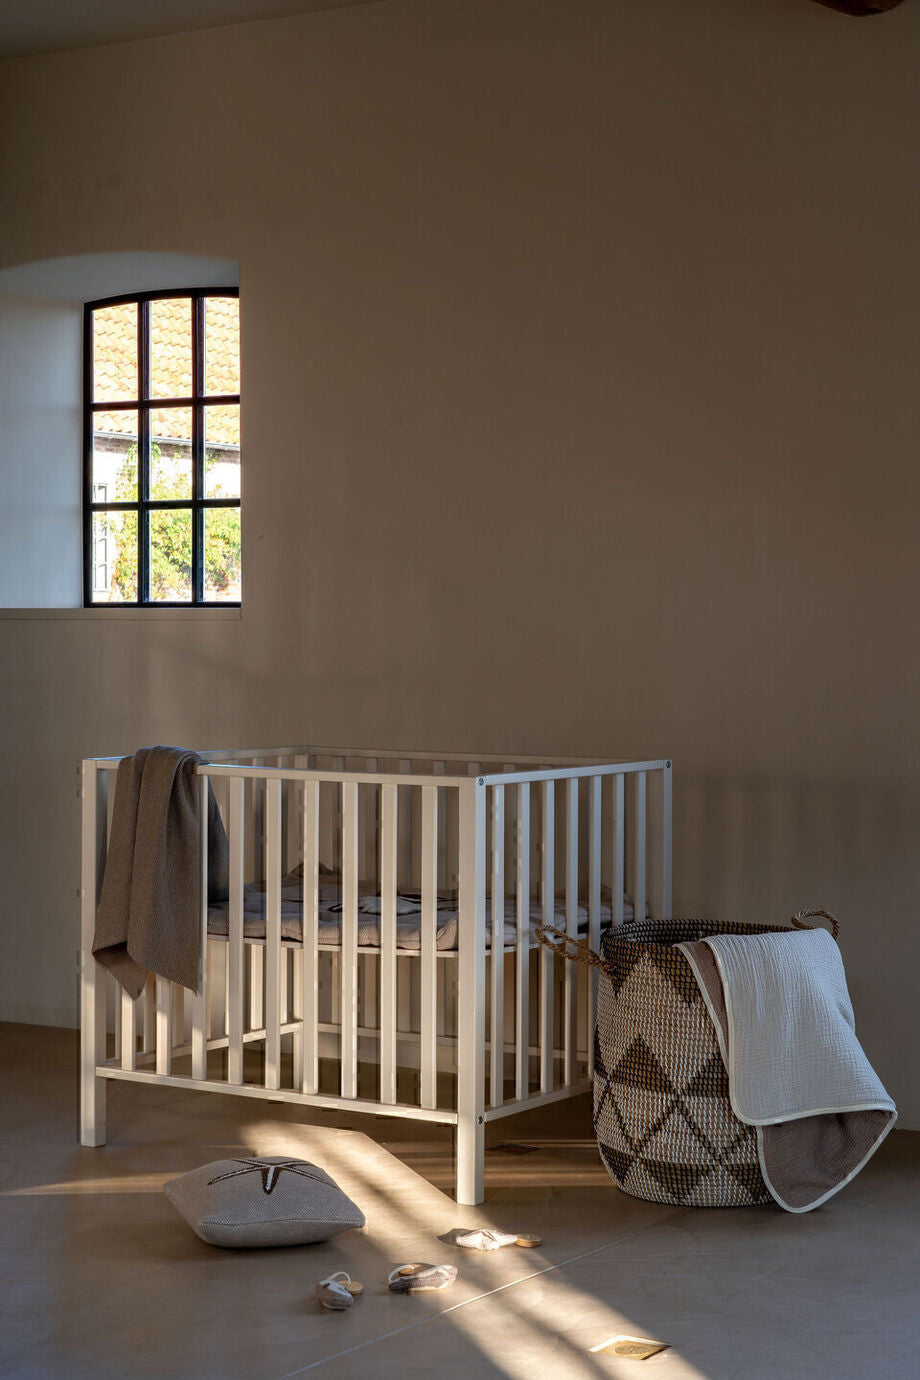 Quax Park Cubic Clay babybox in minimalistisch design, verstelbare hoogte, veilig en stijlvol.